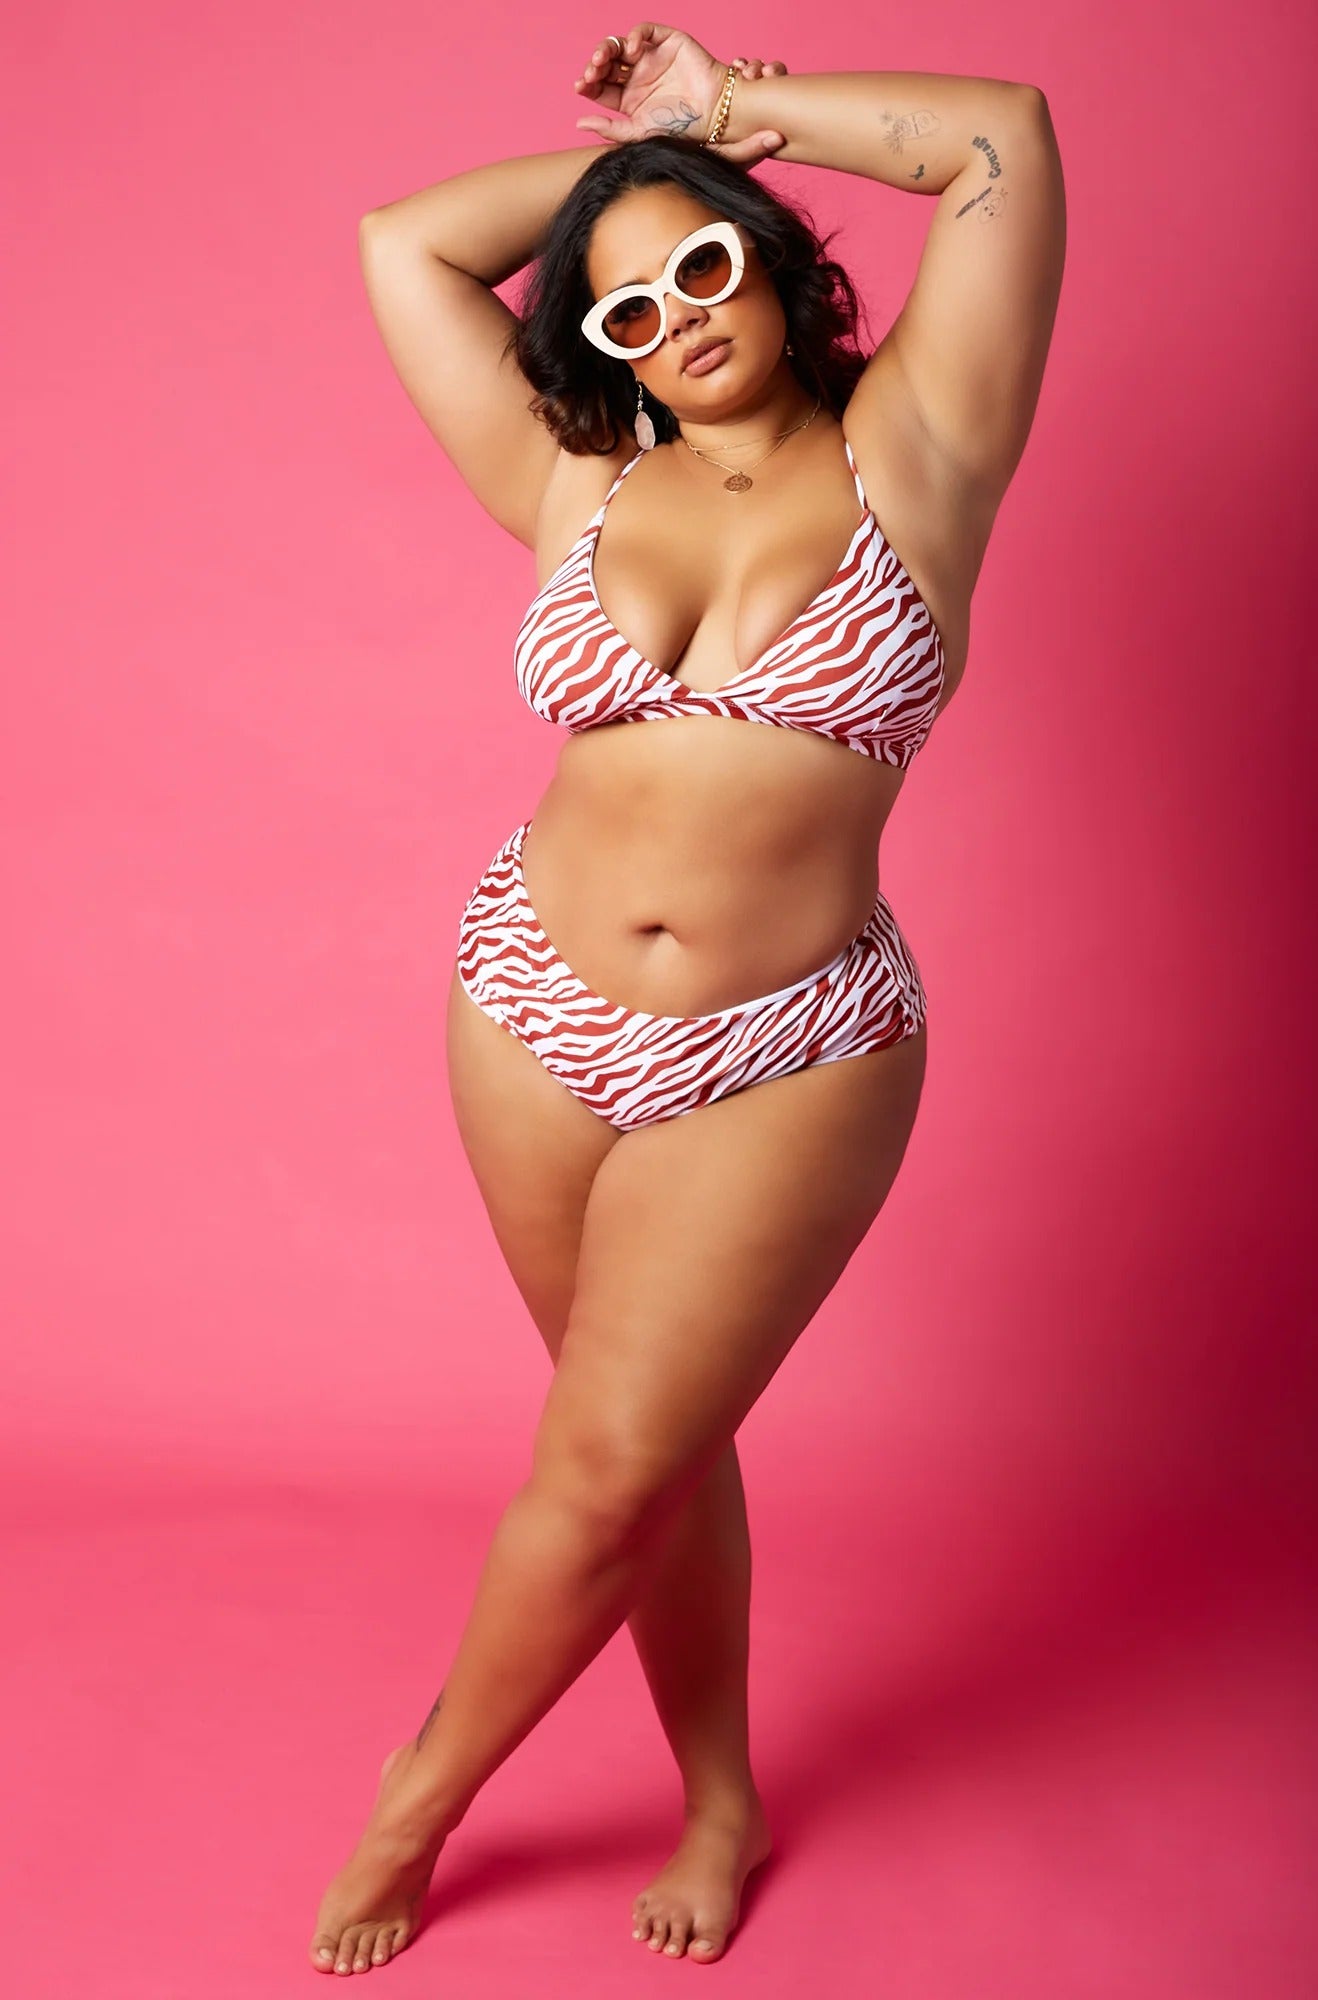 model posing in zebra print bikini with white sunglasses on